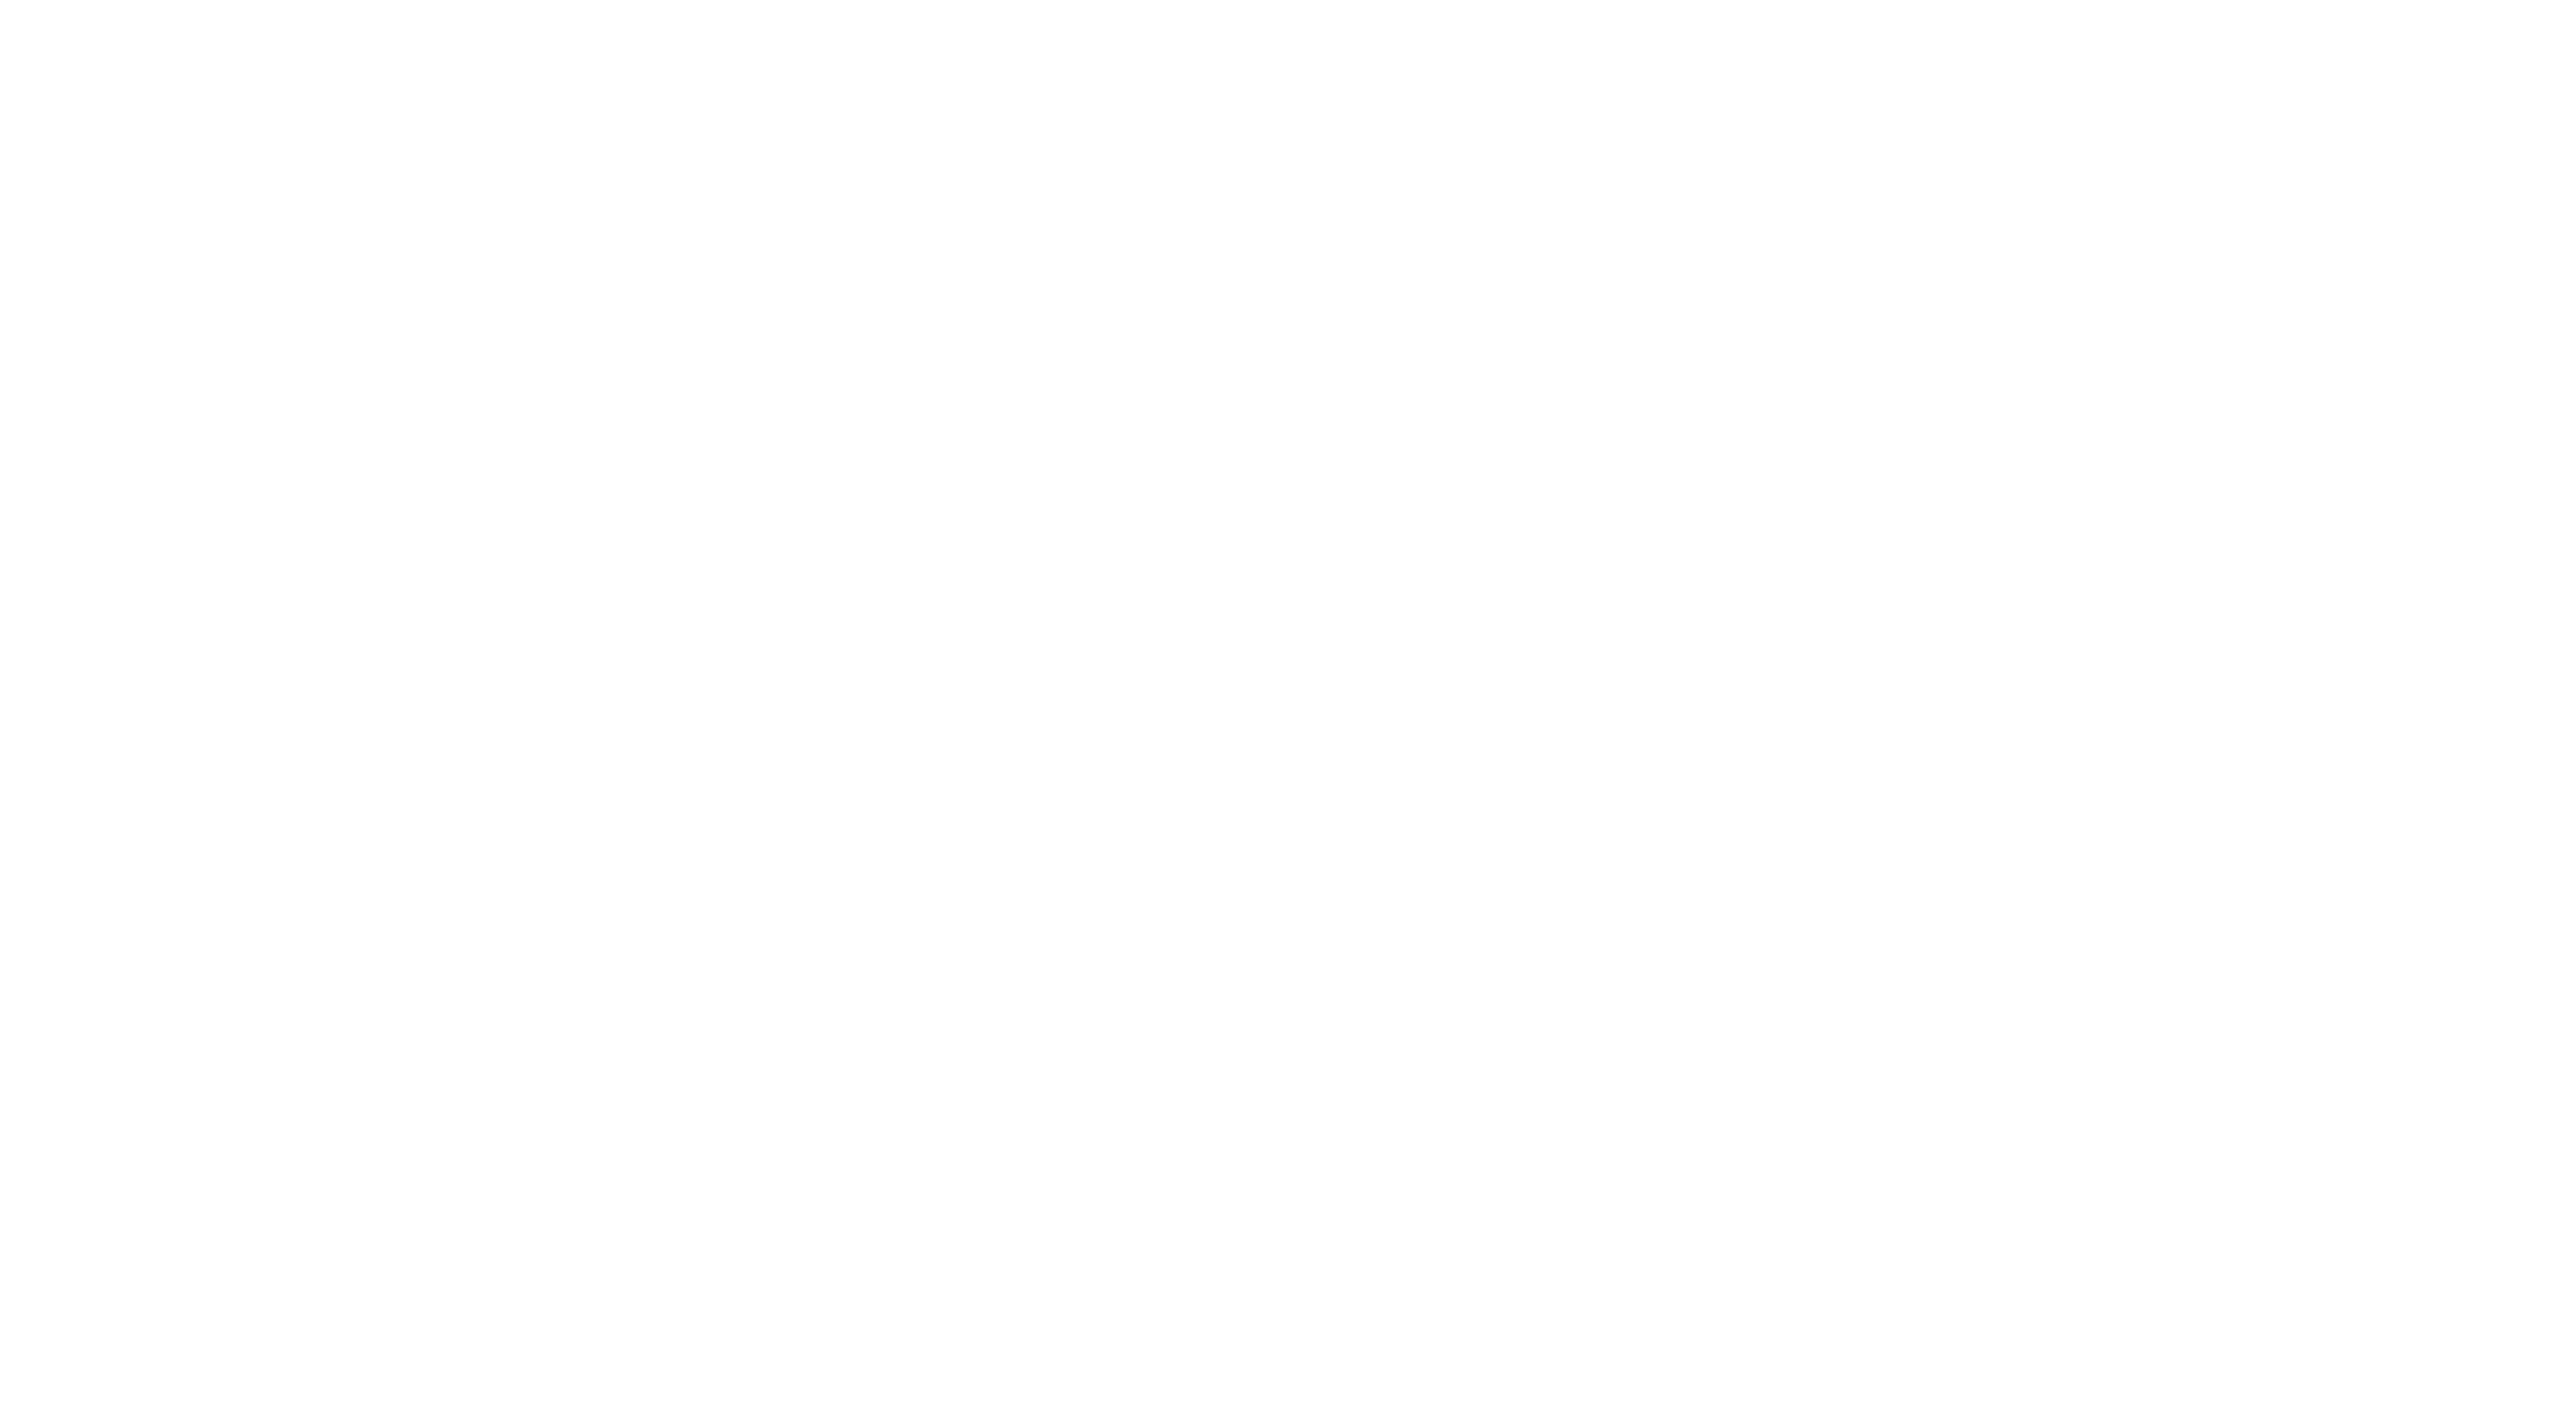 Northwestern Farm Management Co.